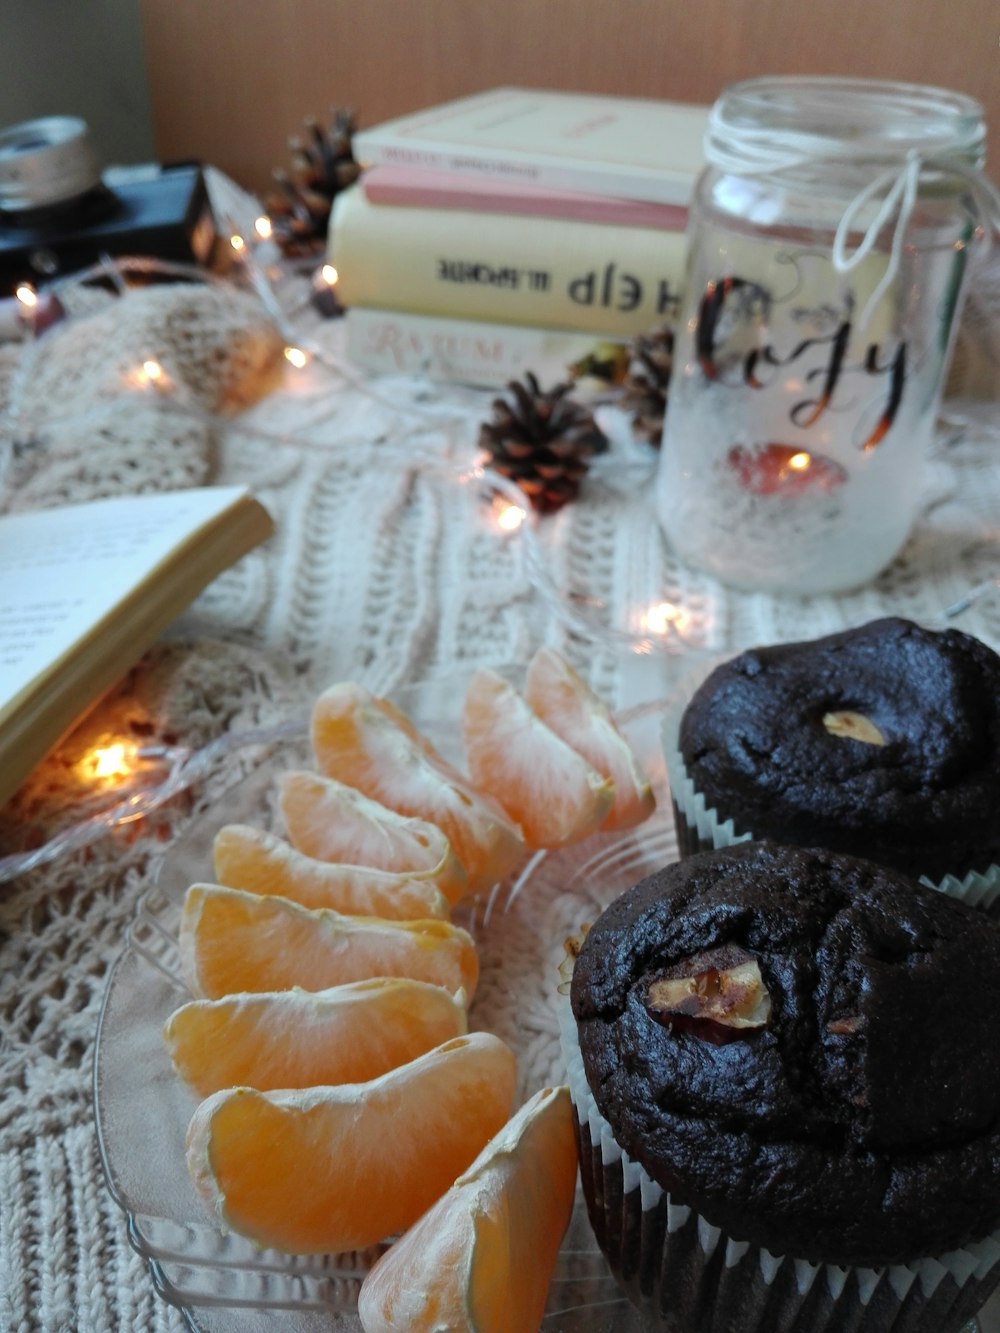 oranges beside baked cupcakes